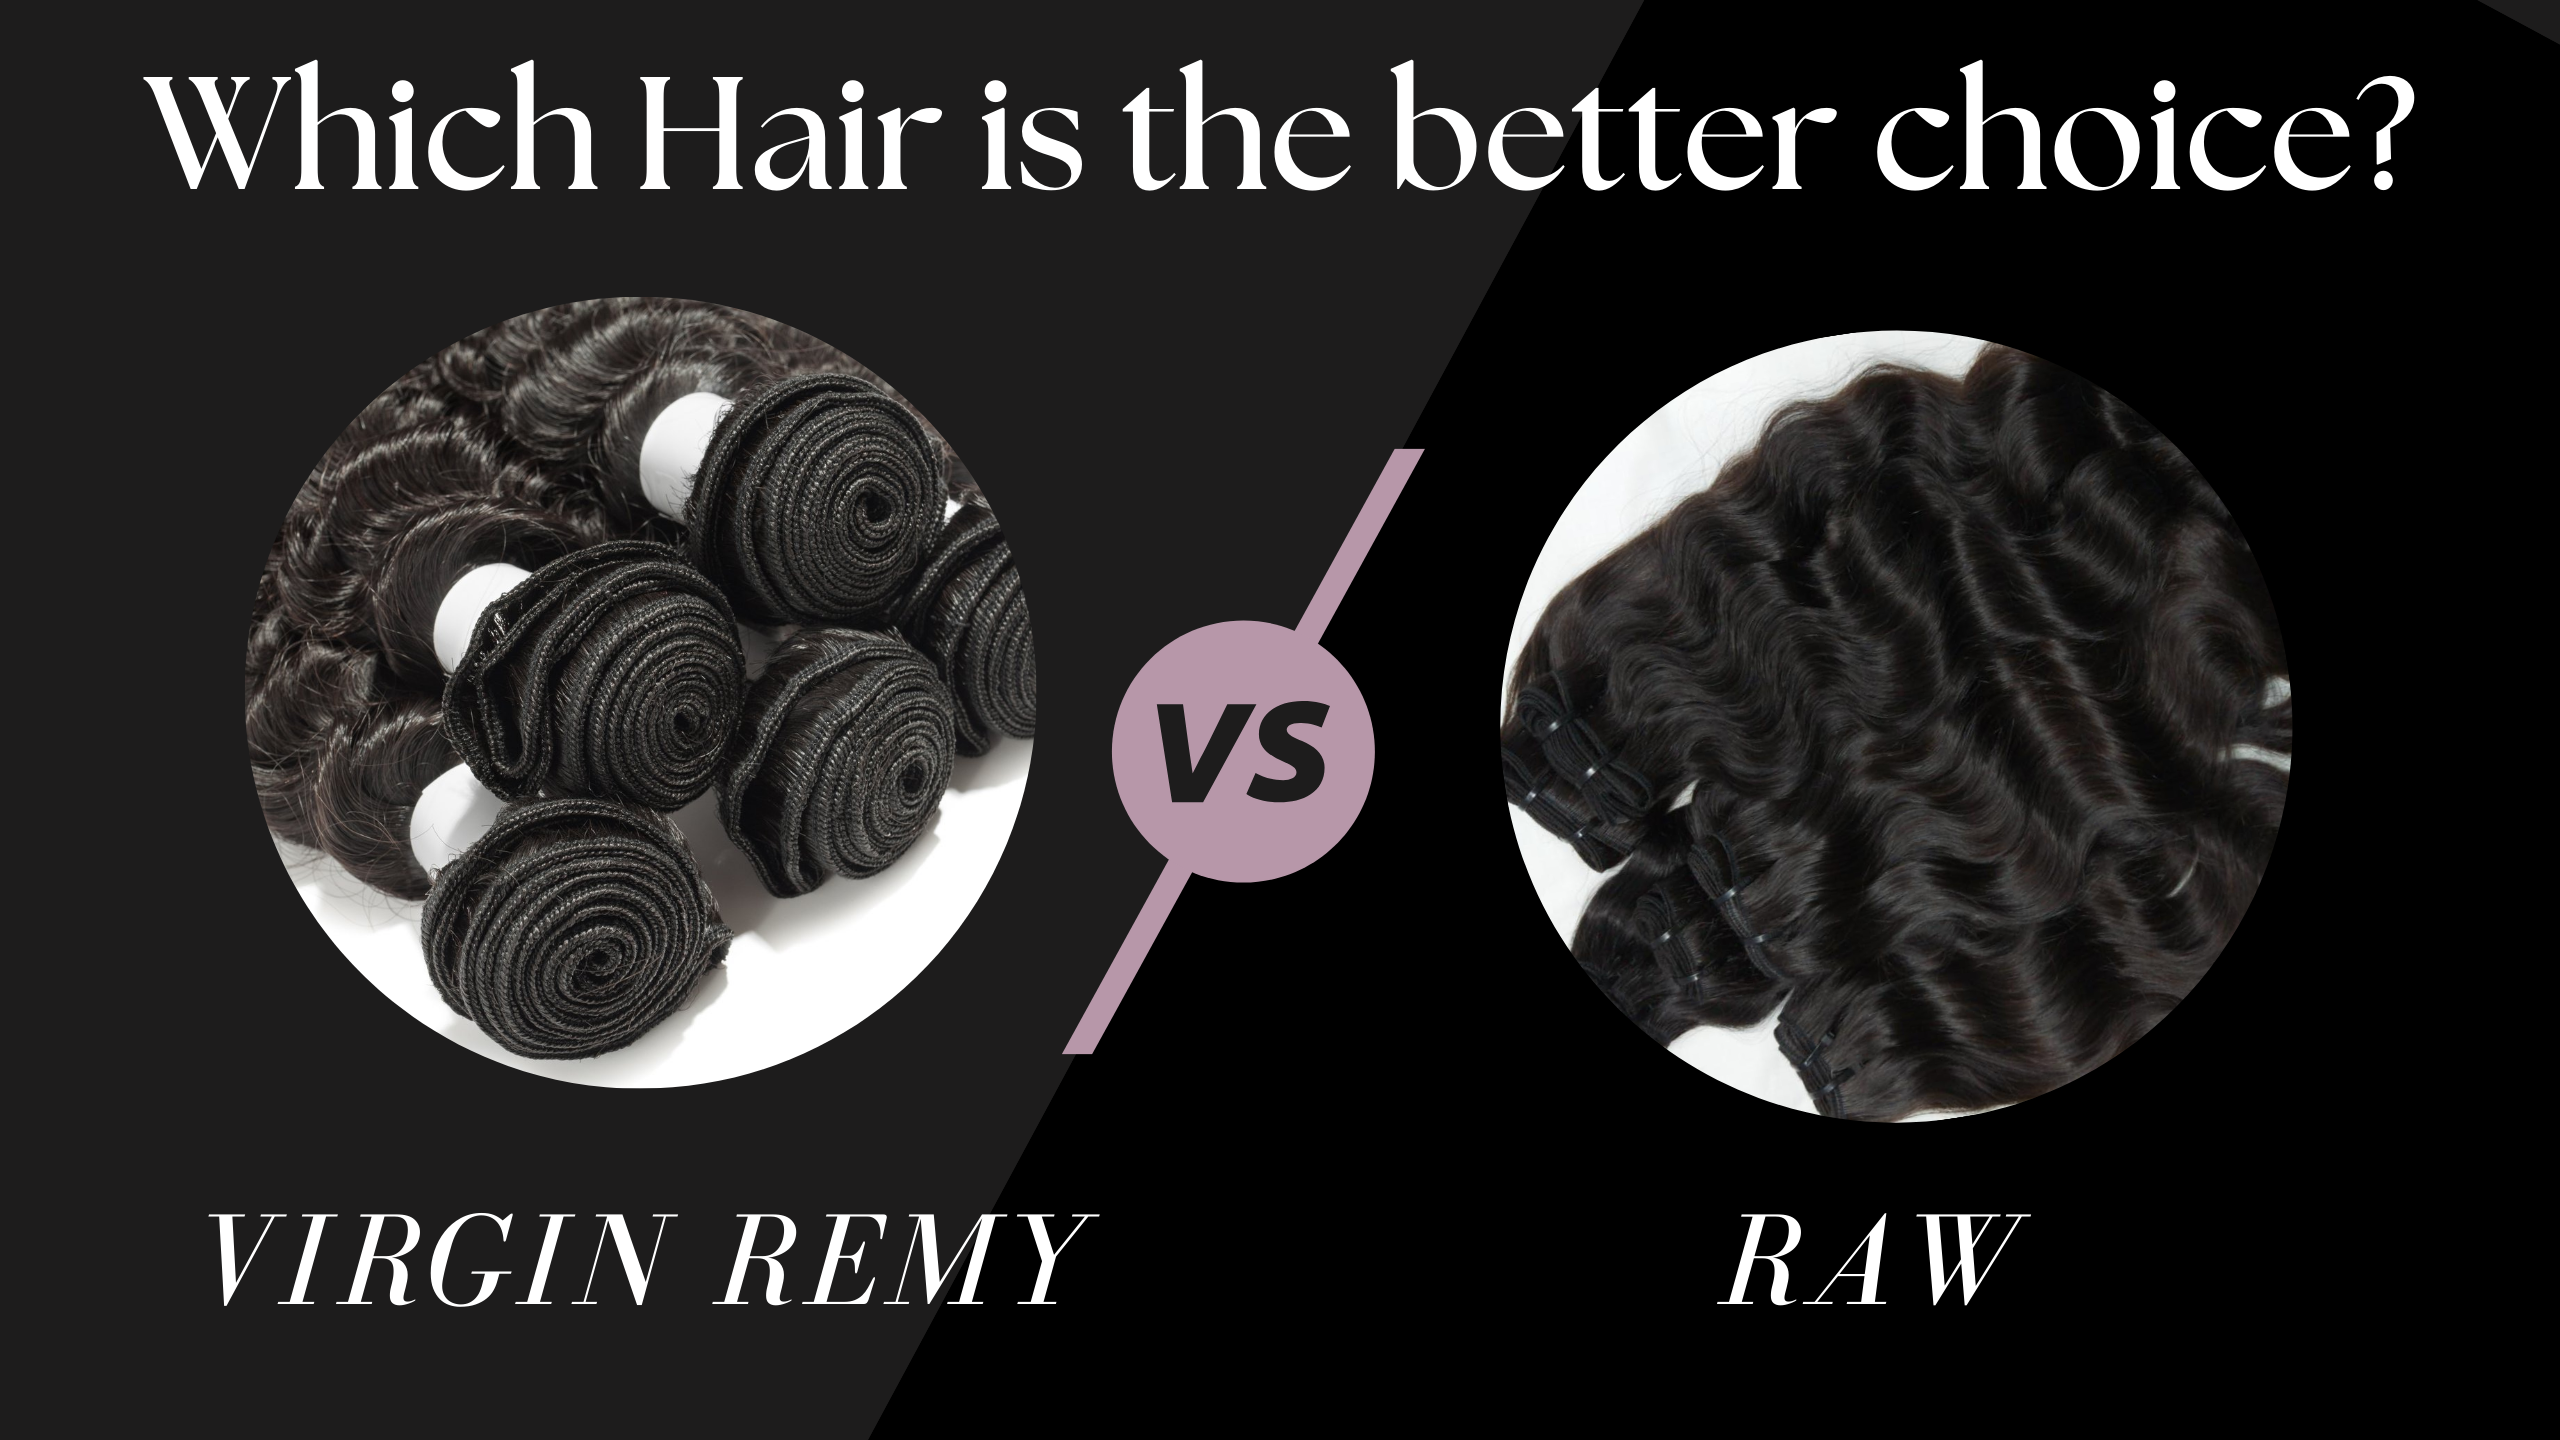 Virgin Remy hair quality vs Raw hair quality